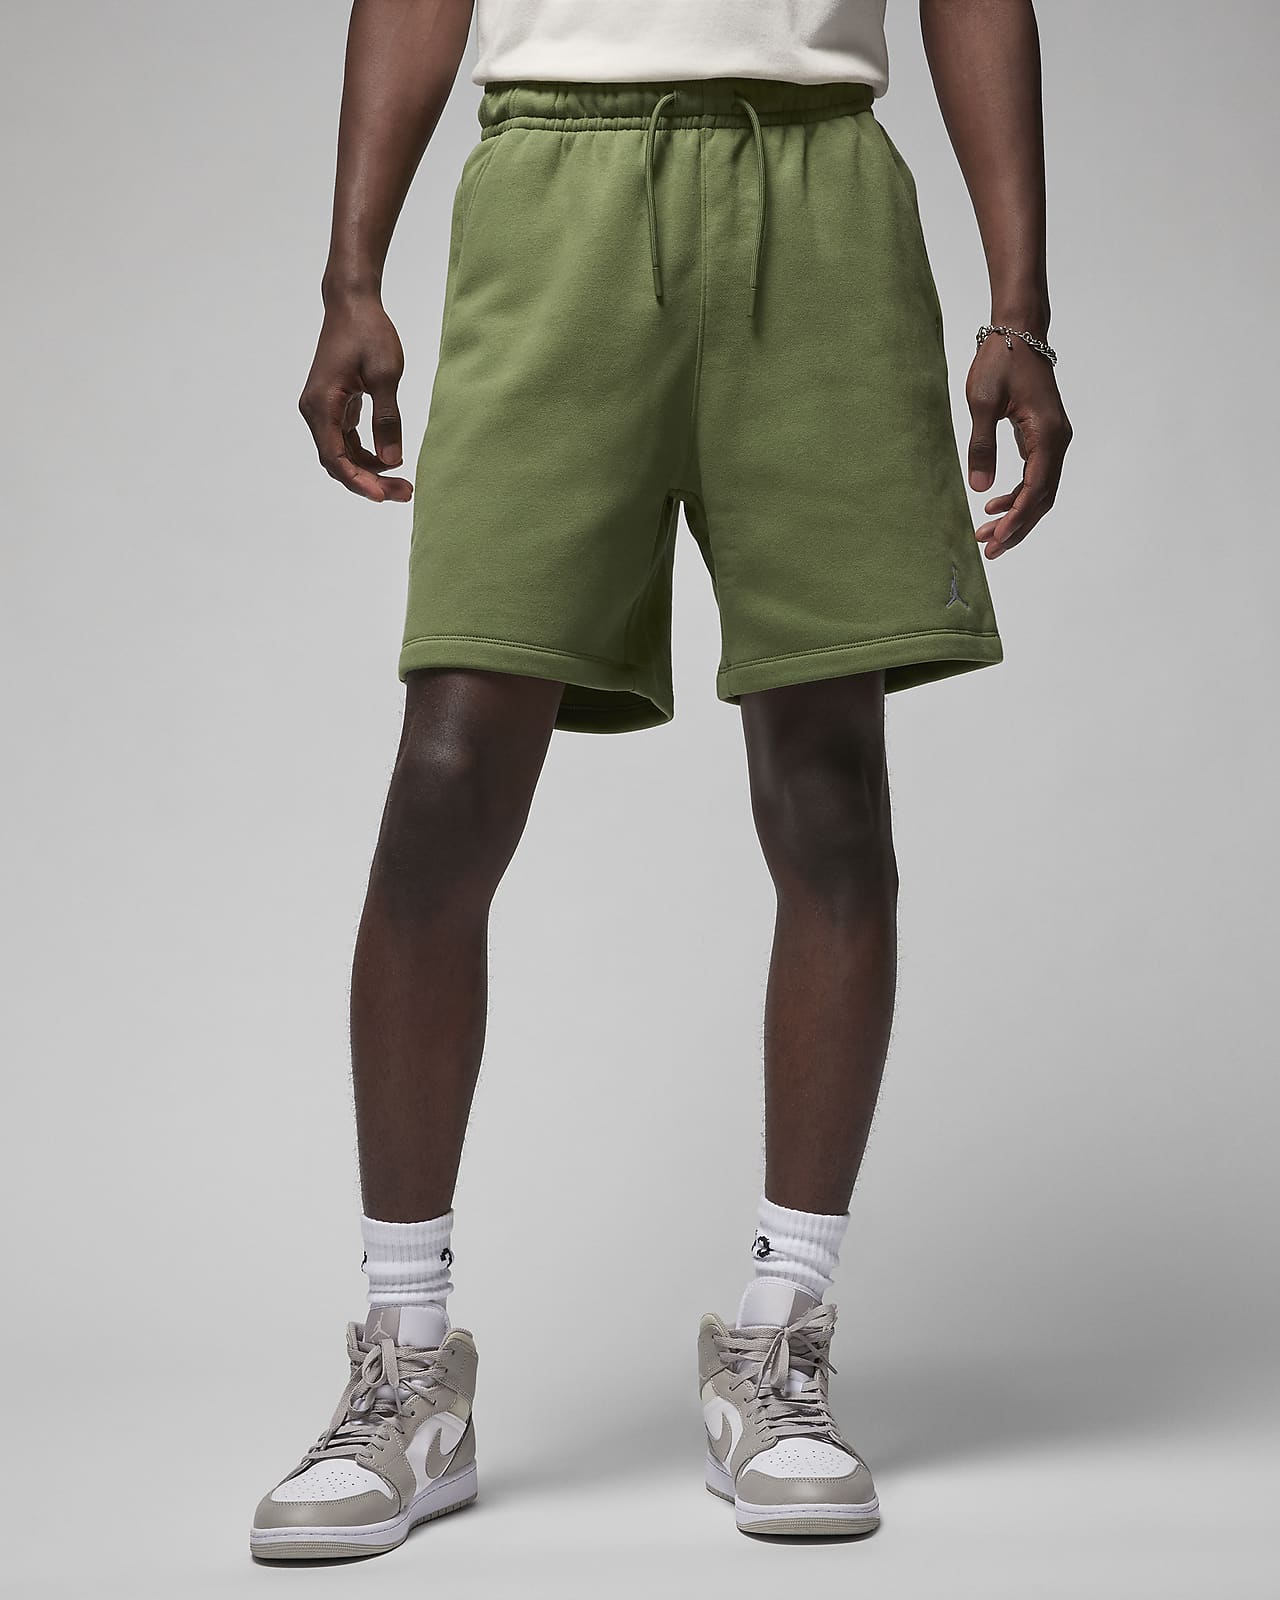 Jordan Brooklyn Fleece Men's Shorts.